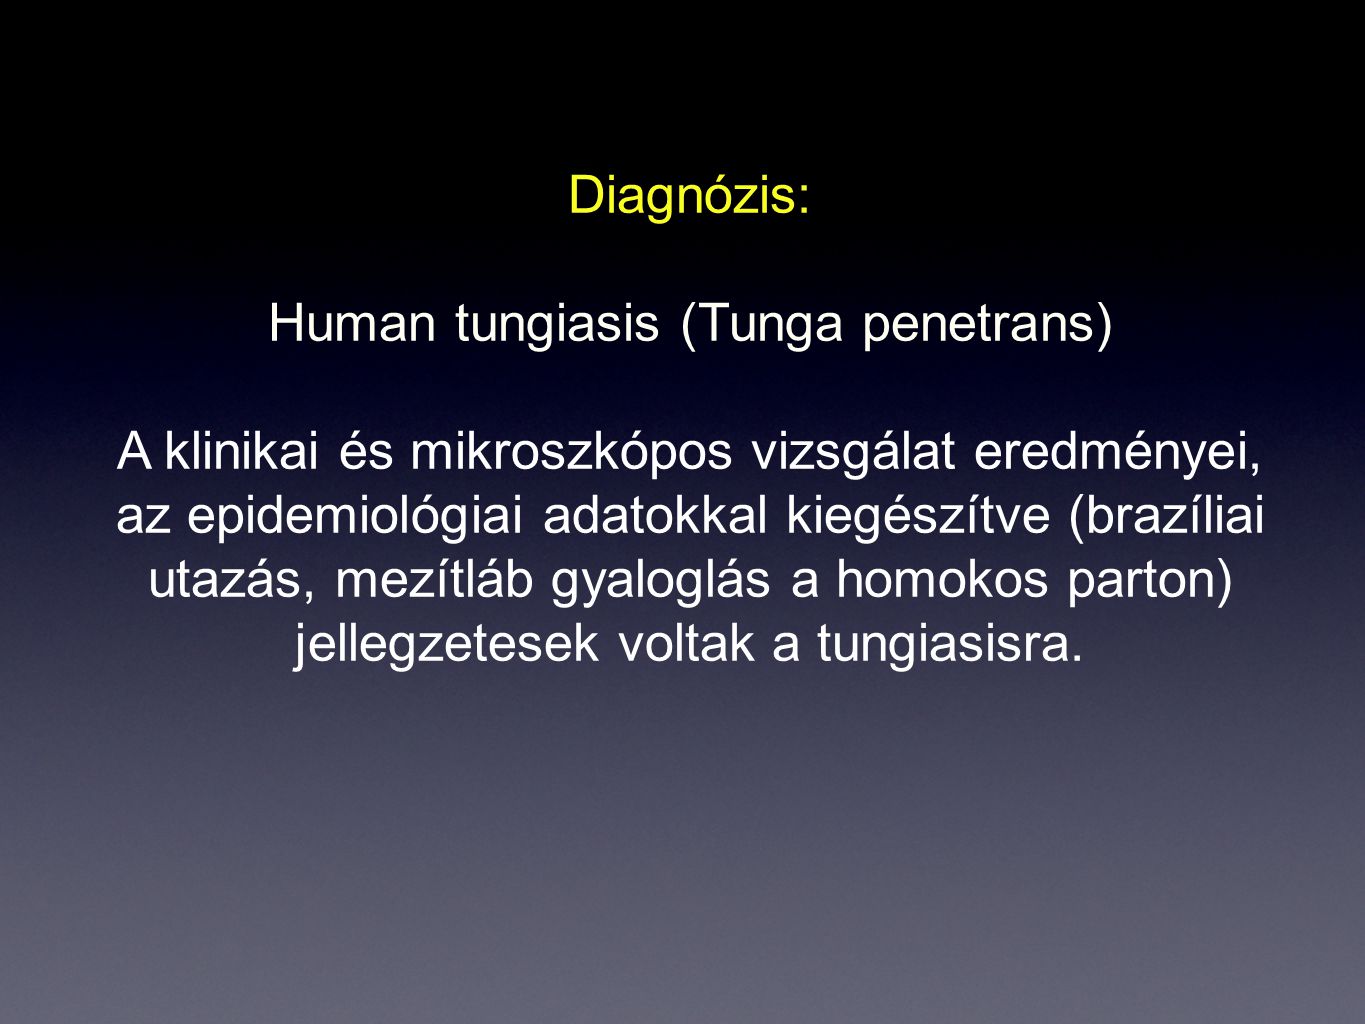 Human tungiasis (Tunga penetrans)